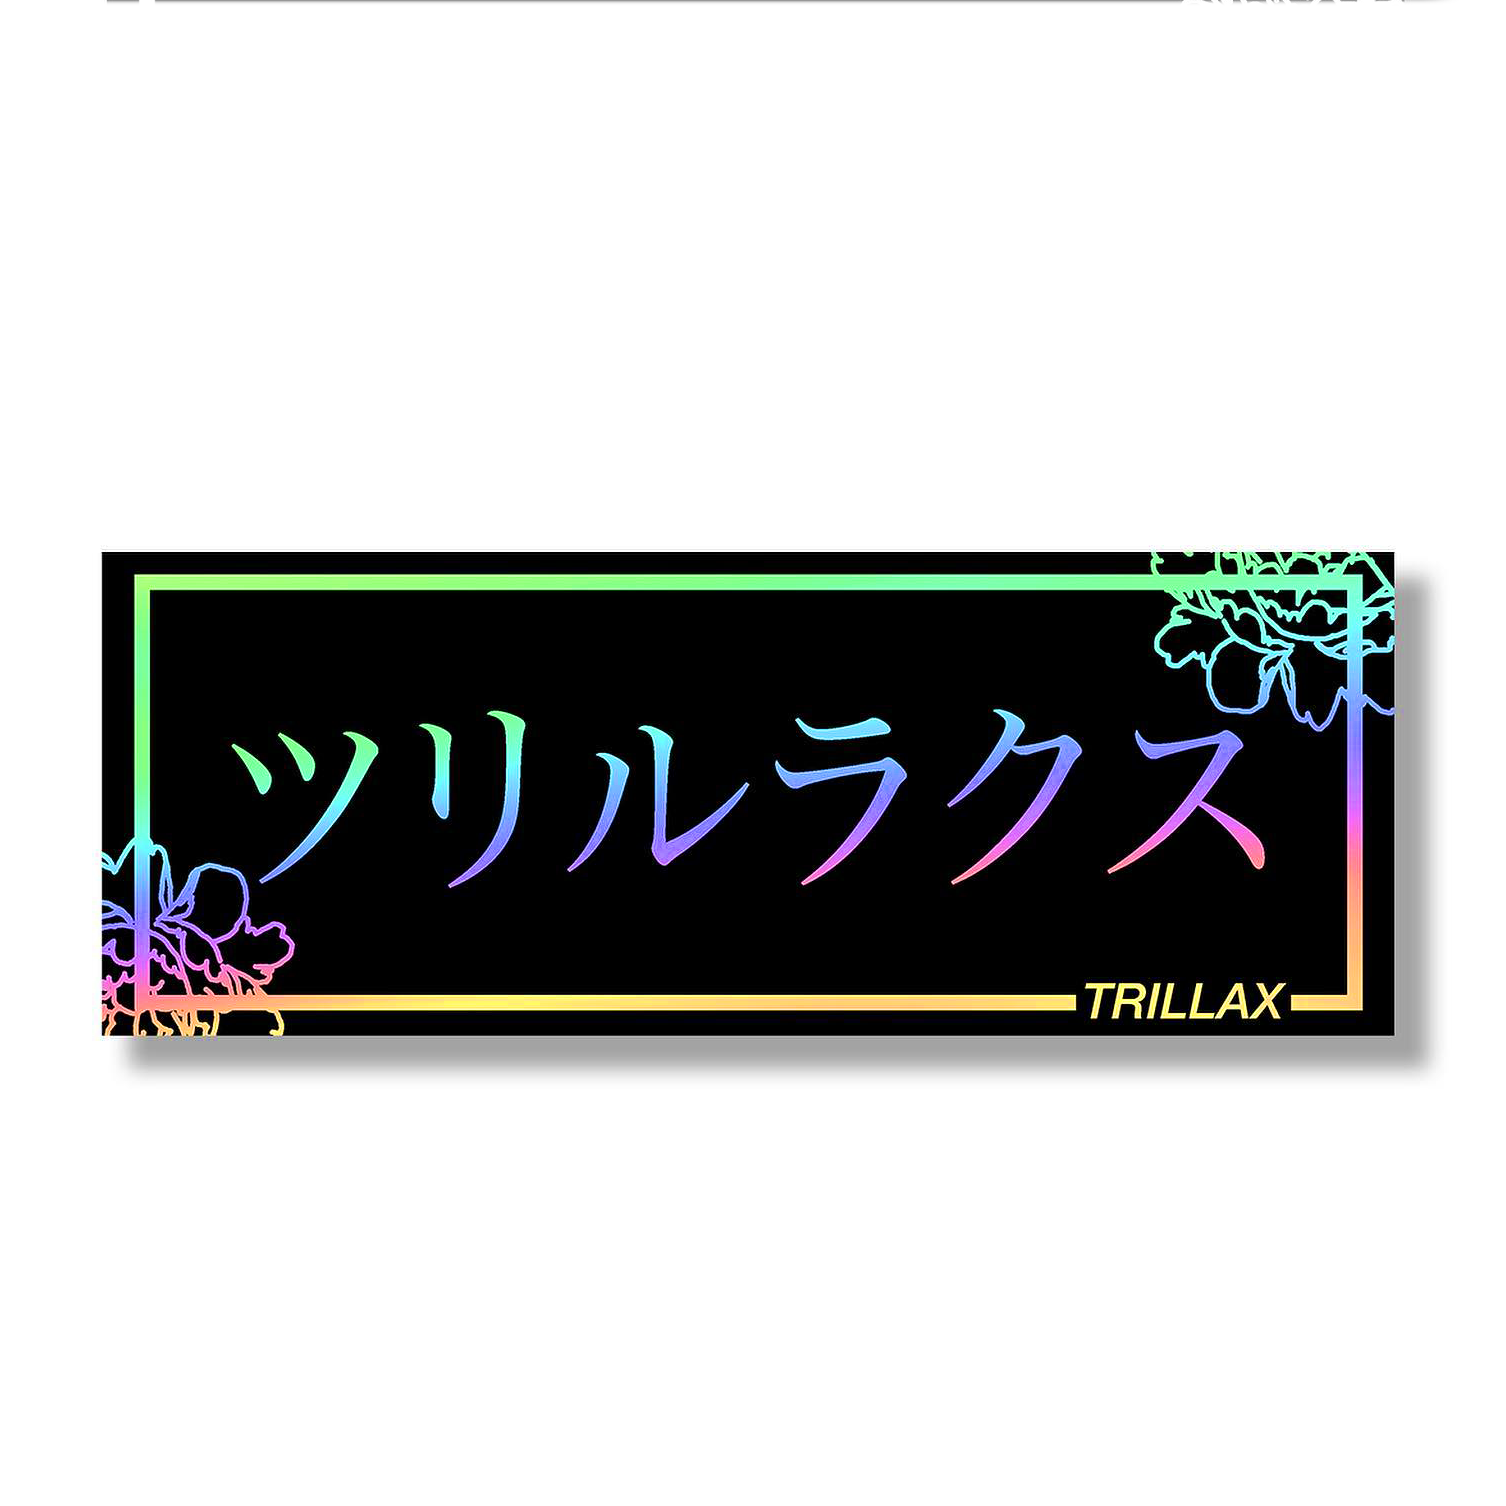 Trillax Holographic Slap Sticker